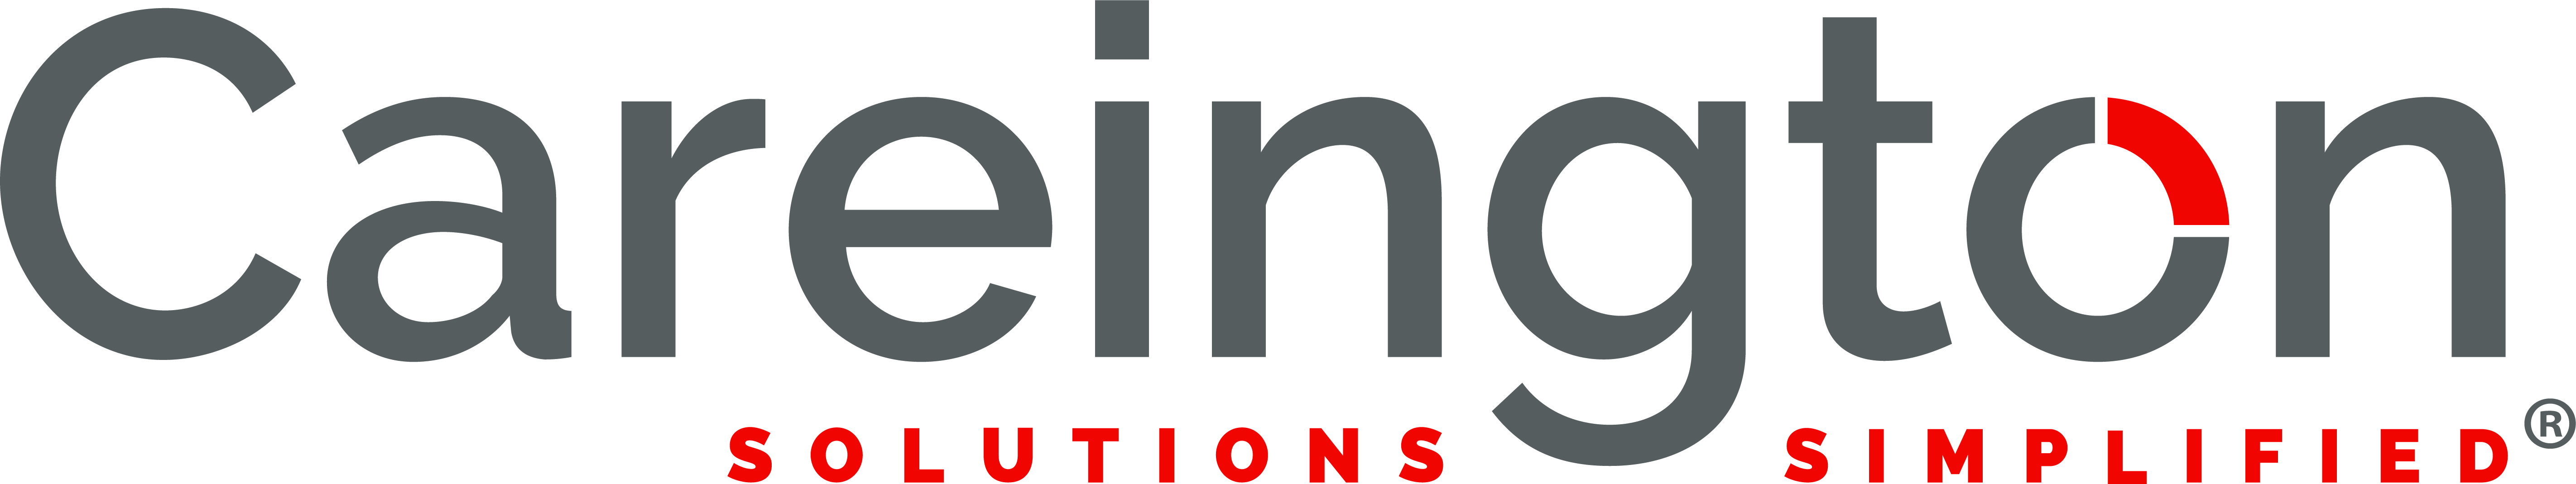 Careington Solution Simplified Logo Reg